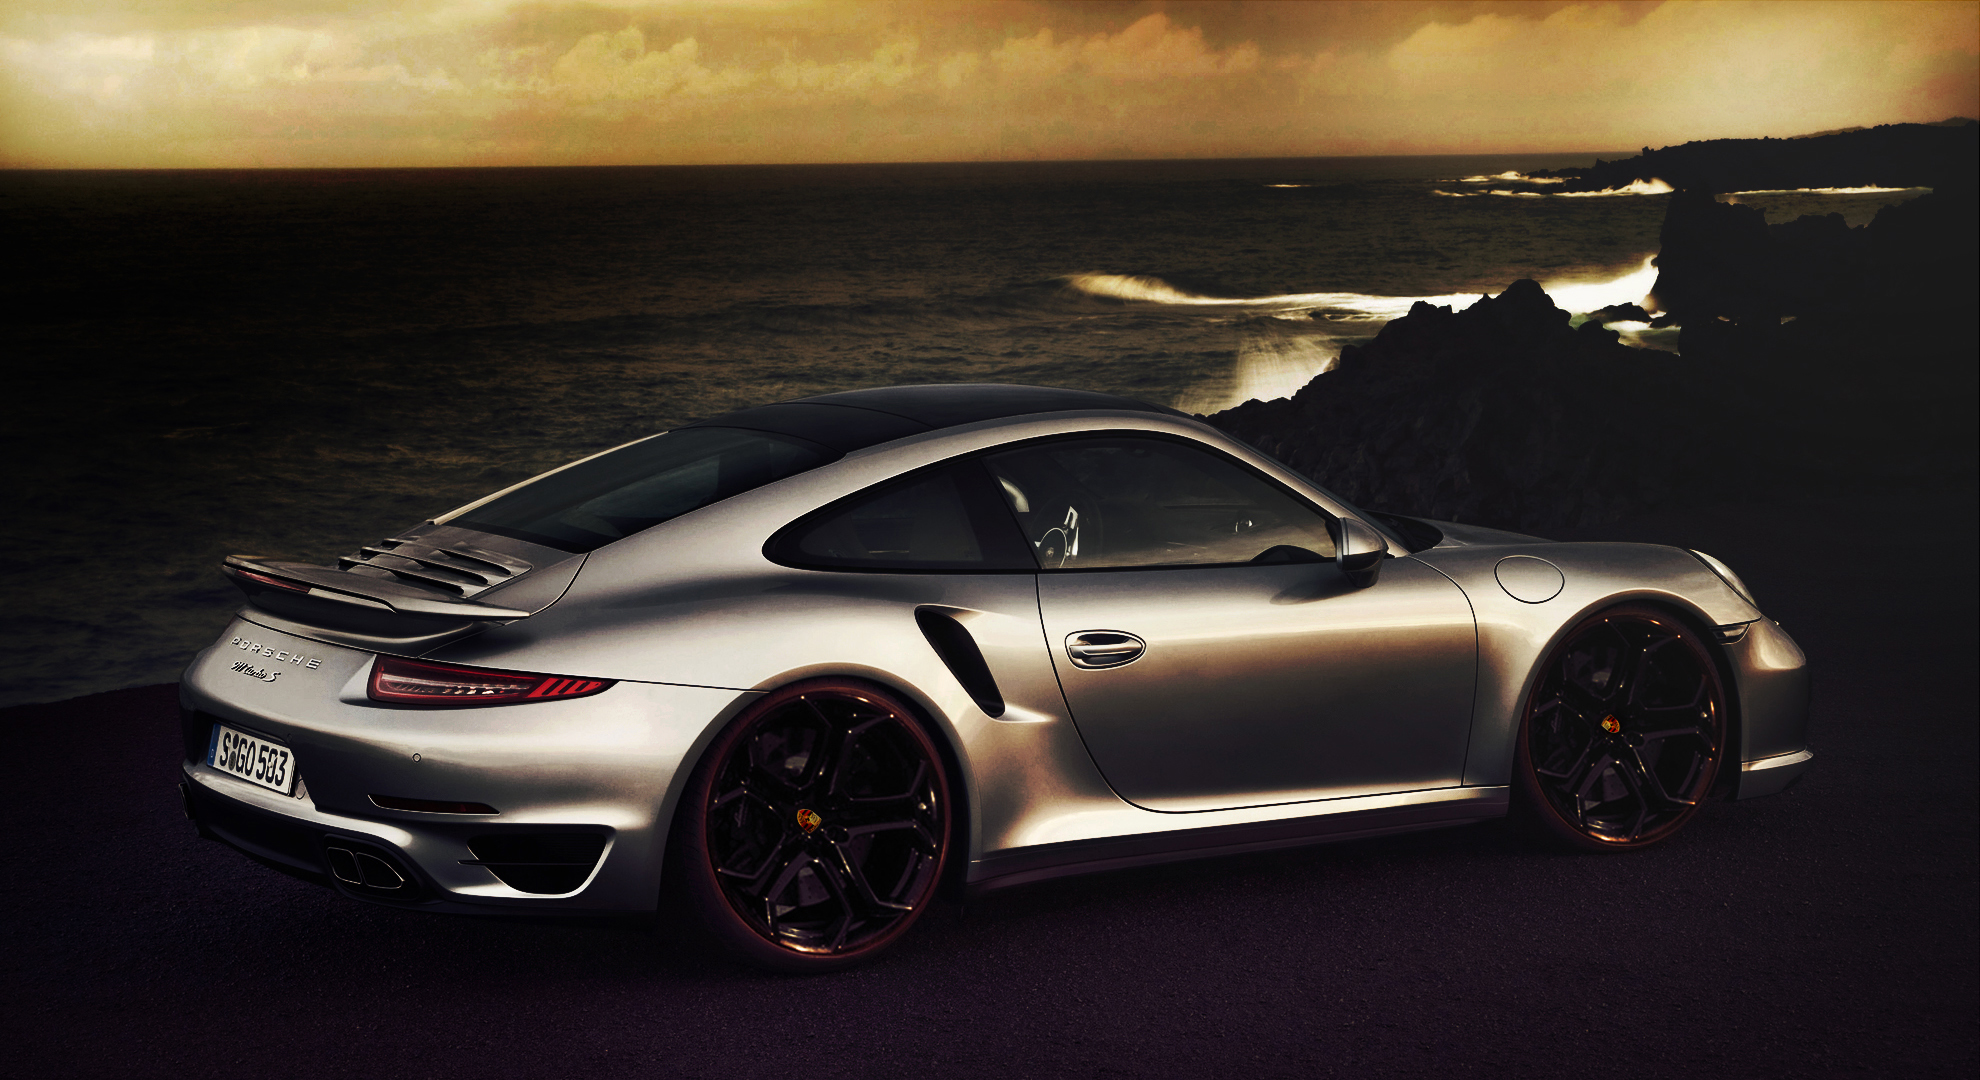 Porsche Turbo HD Wallpaper Background Image